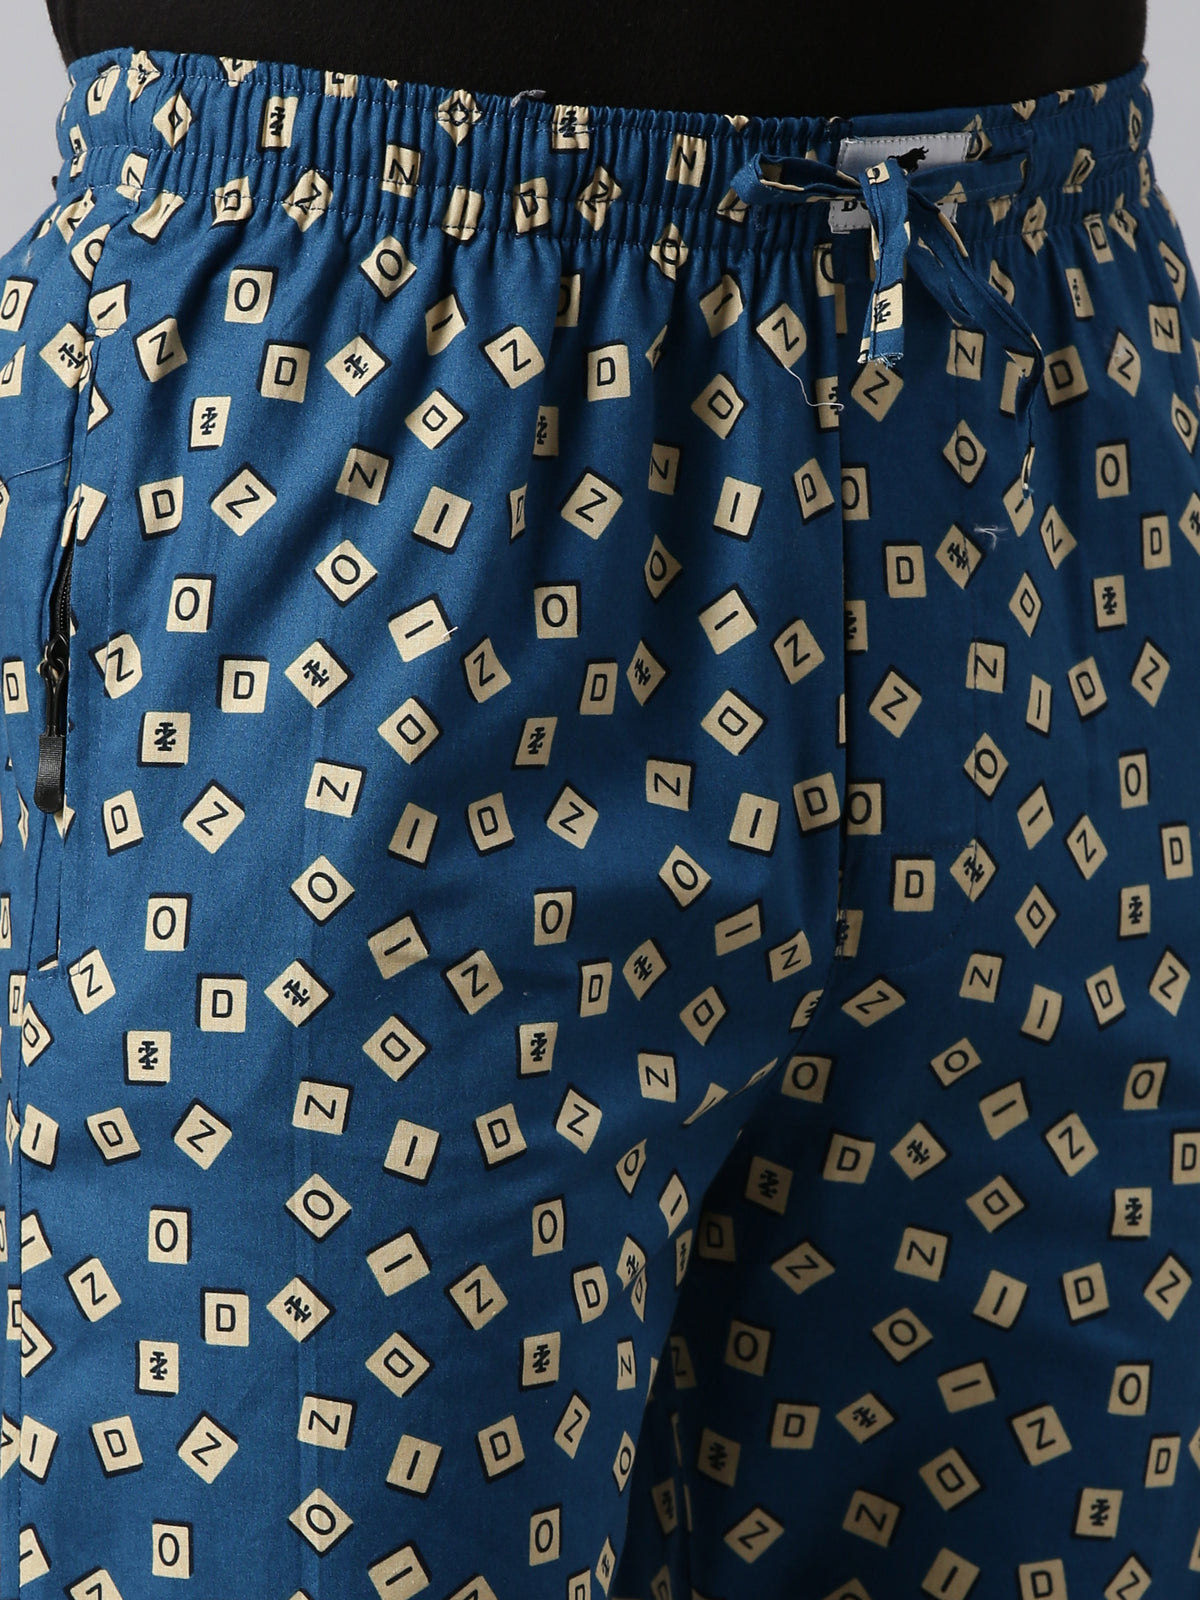 Alphabetic Teal Blue Pyjamas Pyjamas Bushirt   